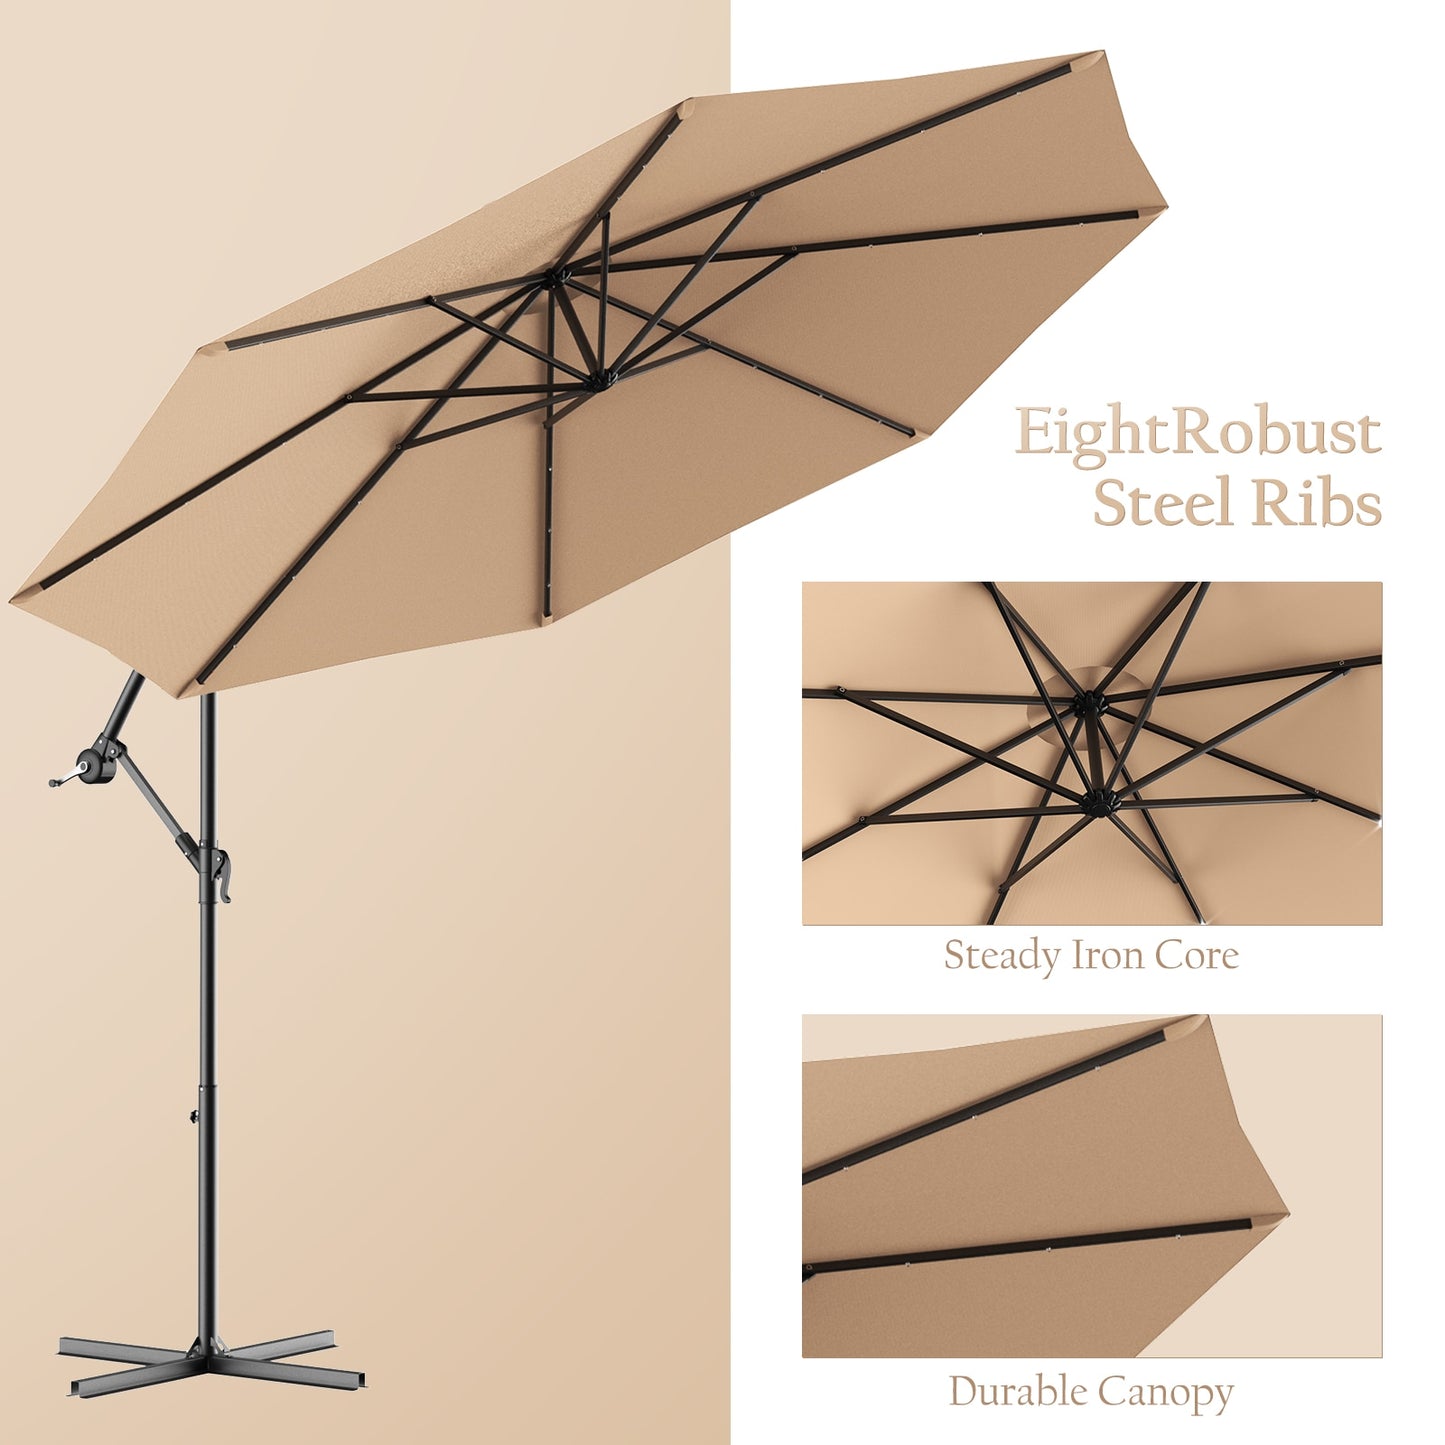 Costway 10&#39; Hanging Solar LED Umbrella Patio Sun Shade Offset Market W/Base OP70754